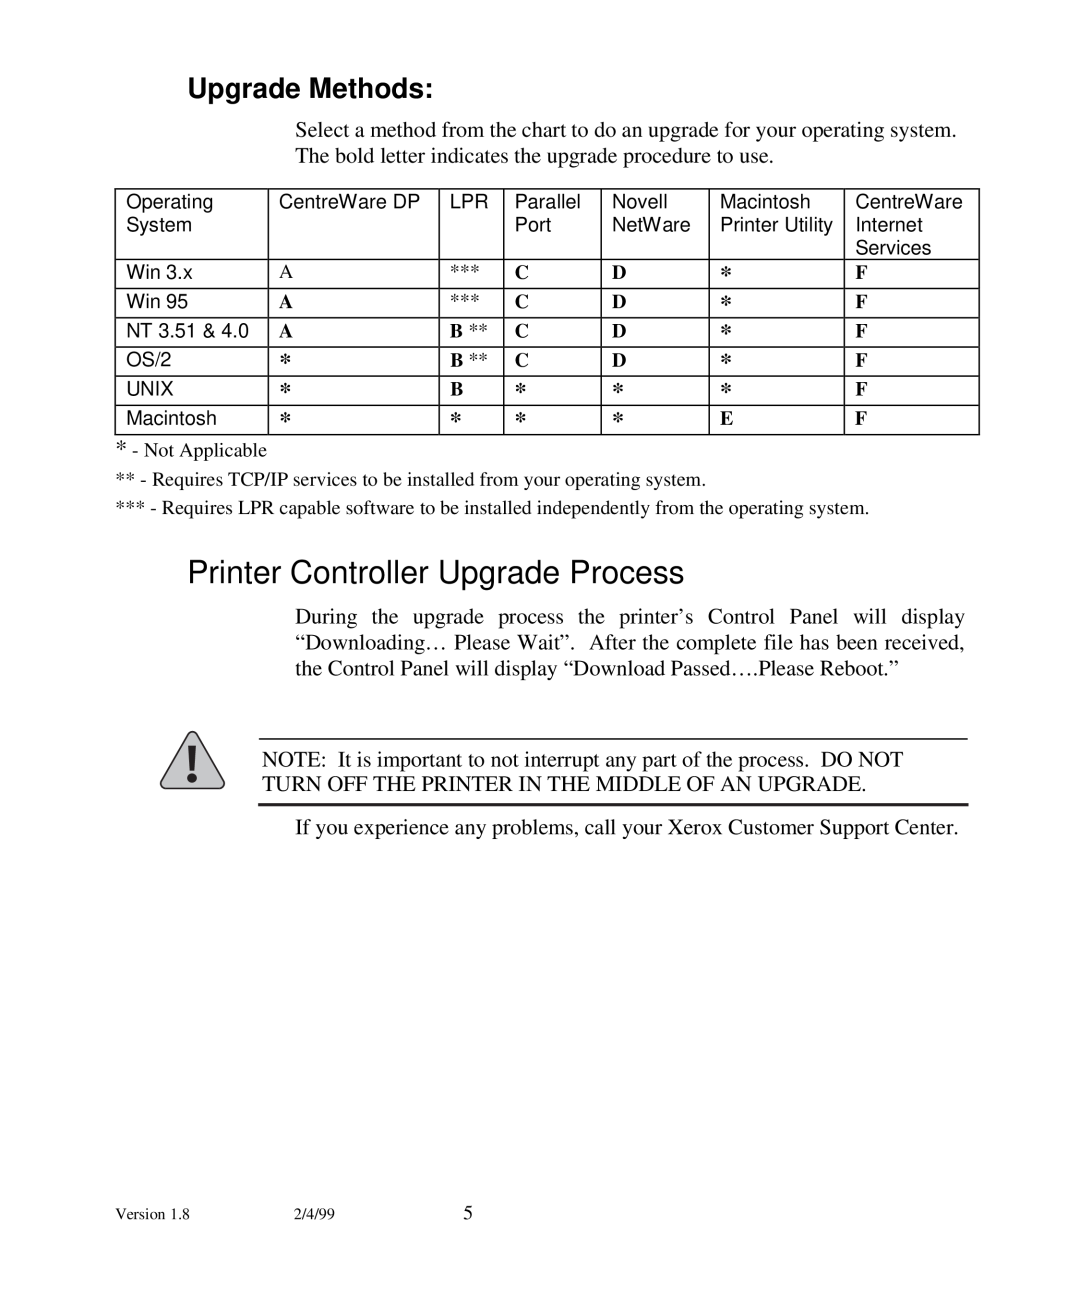 Xerox N17 manual Upgrade Methods, Printer Controller Upgrade Process 